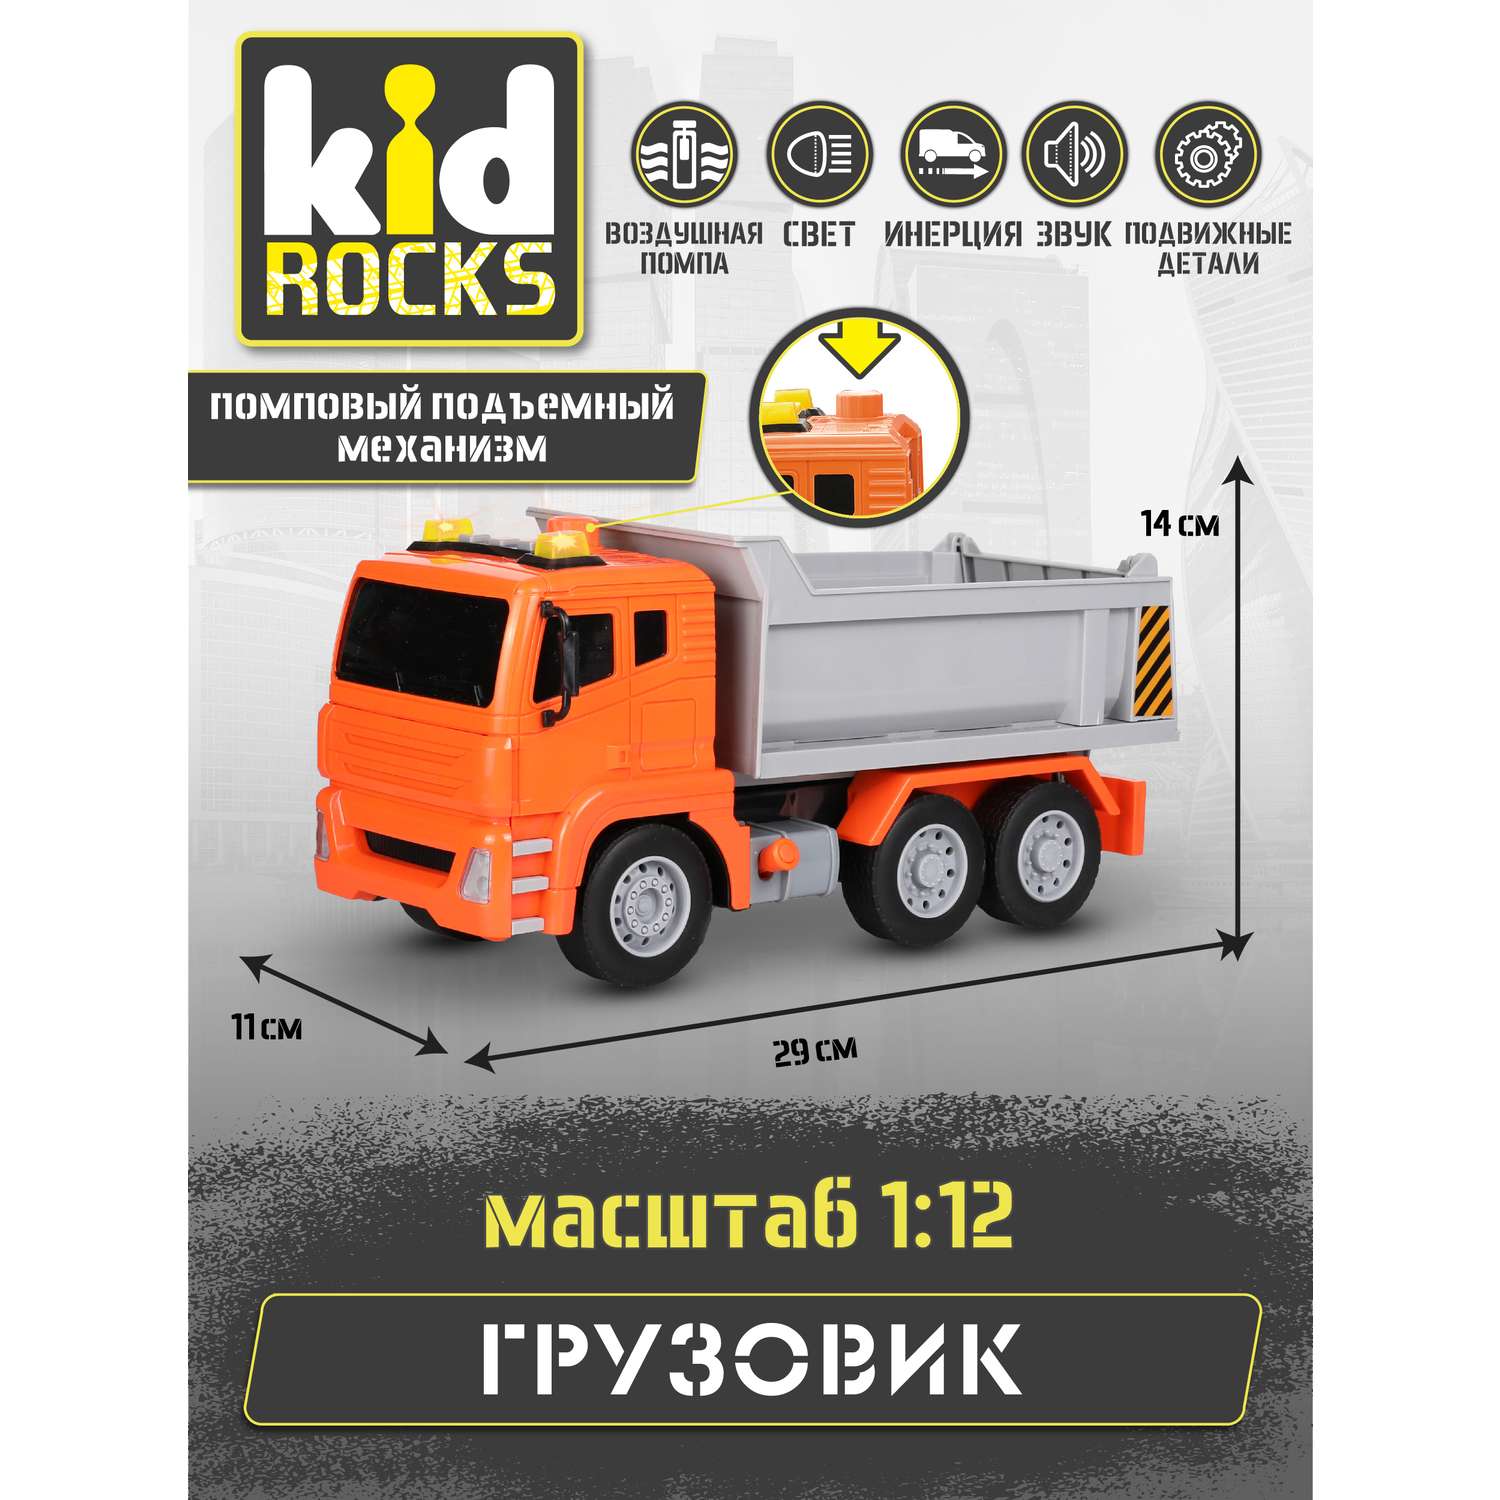 Модель Kid Rocks Грузовик масштаб 1:12 со звуком и светом YK-2112 - фото 4